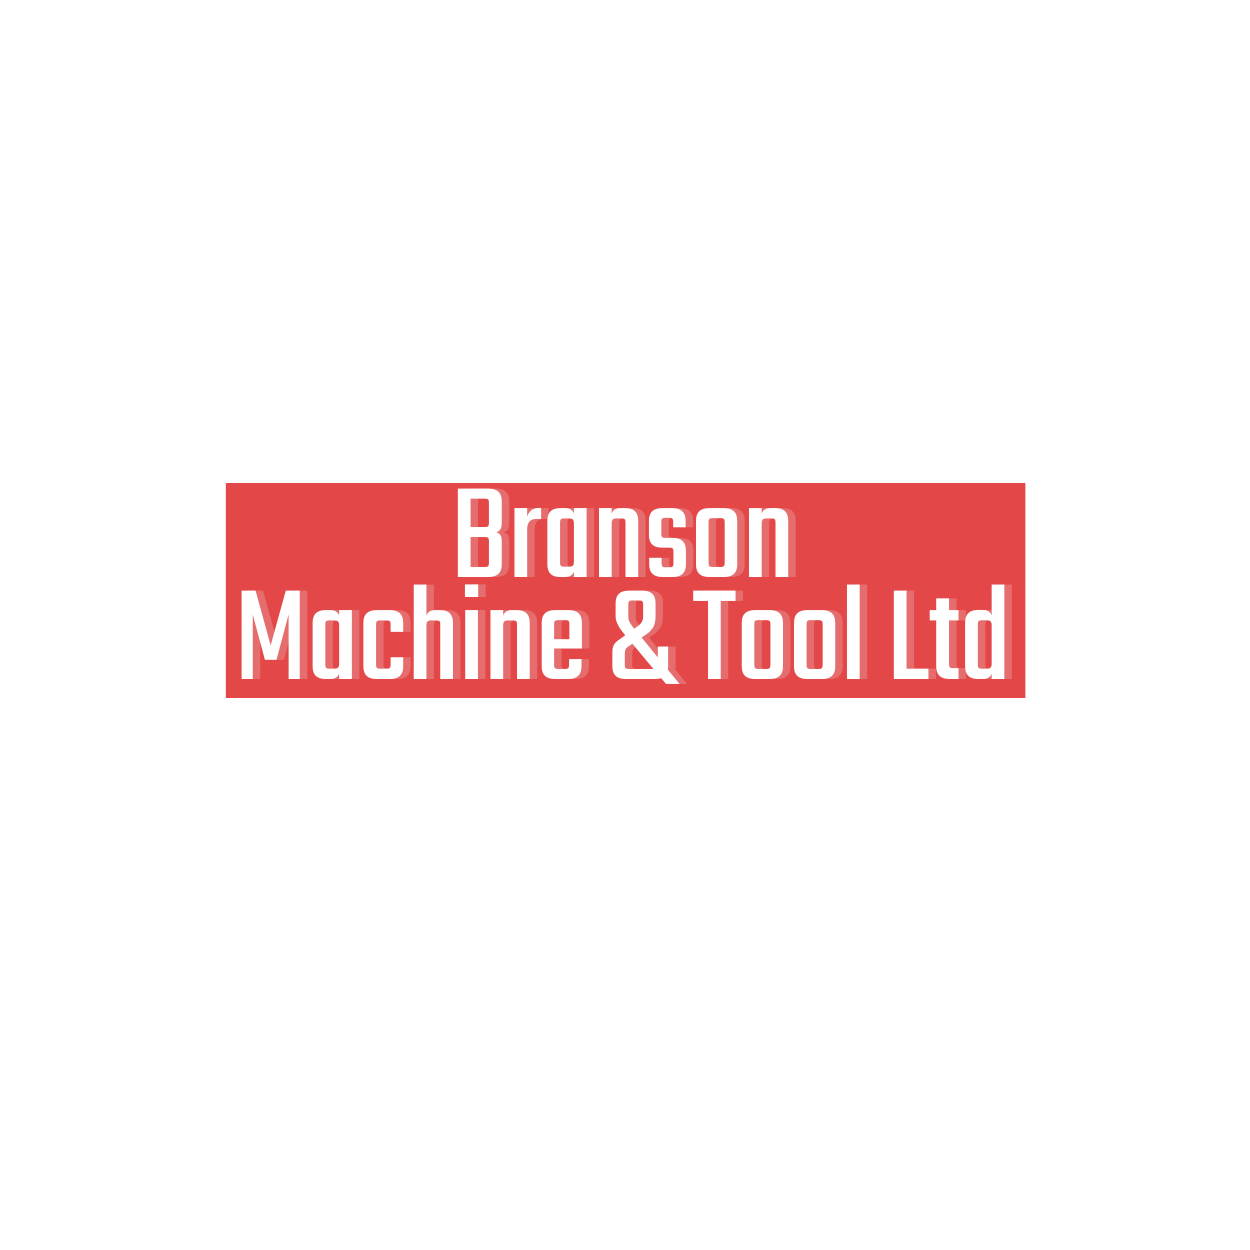 Branson Machine & Tool Ltd.